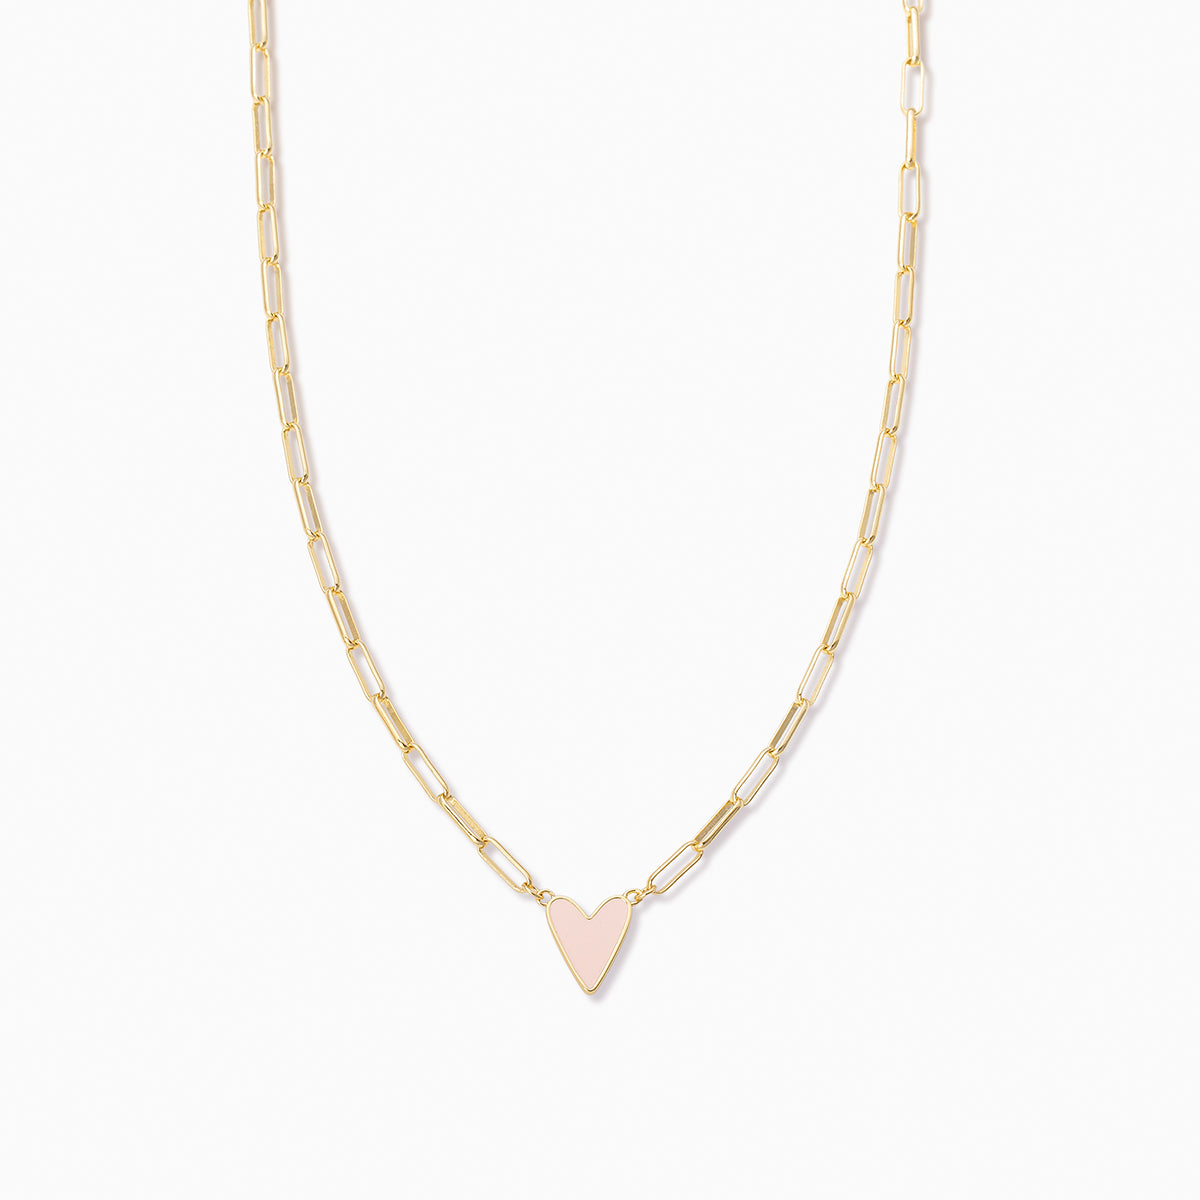 Enamel Heart Necklace | Off White | Product Image | Uncommon James